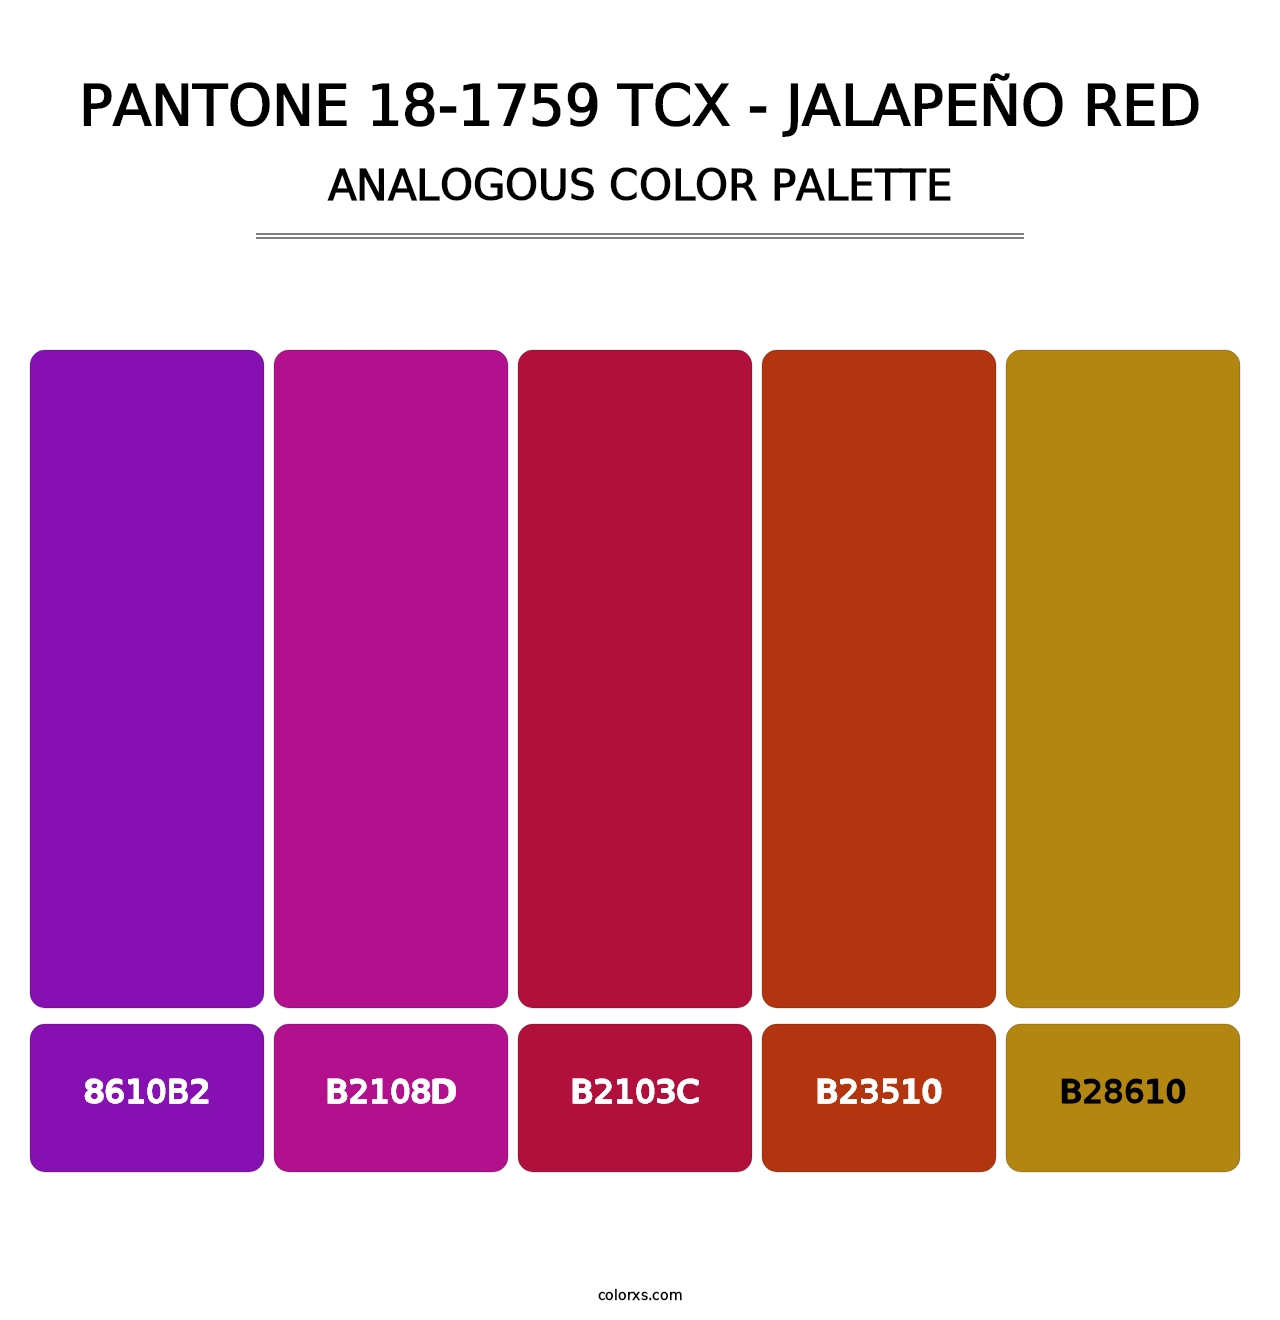 PANTONE 18-1759 TCX - Jalapeño Red - Analogous Color Palette